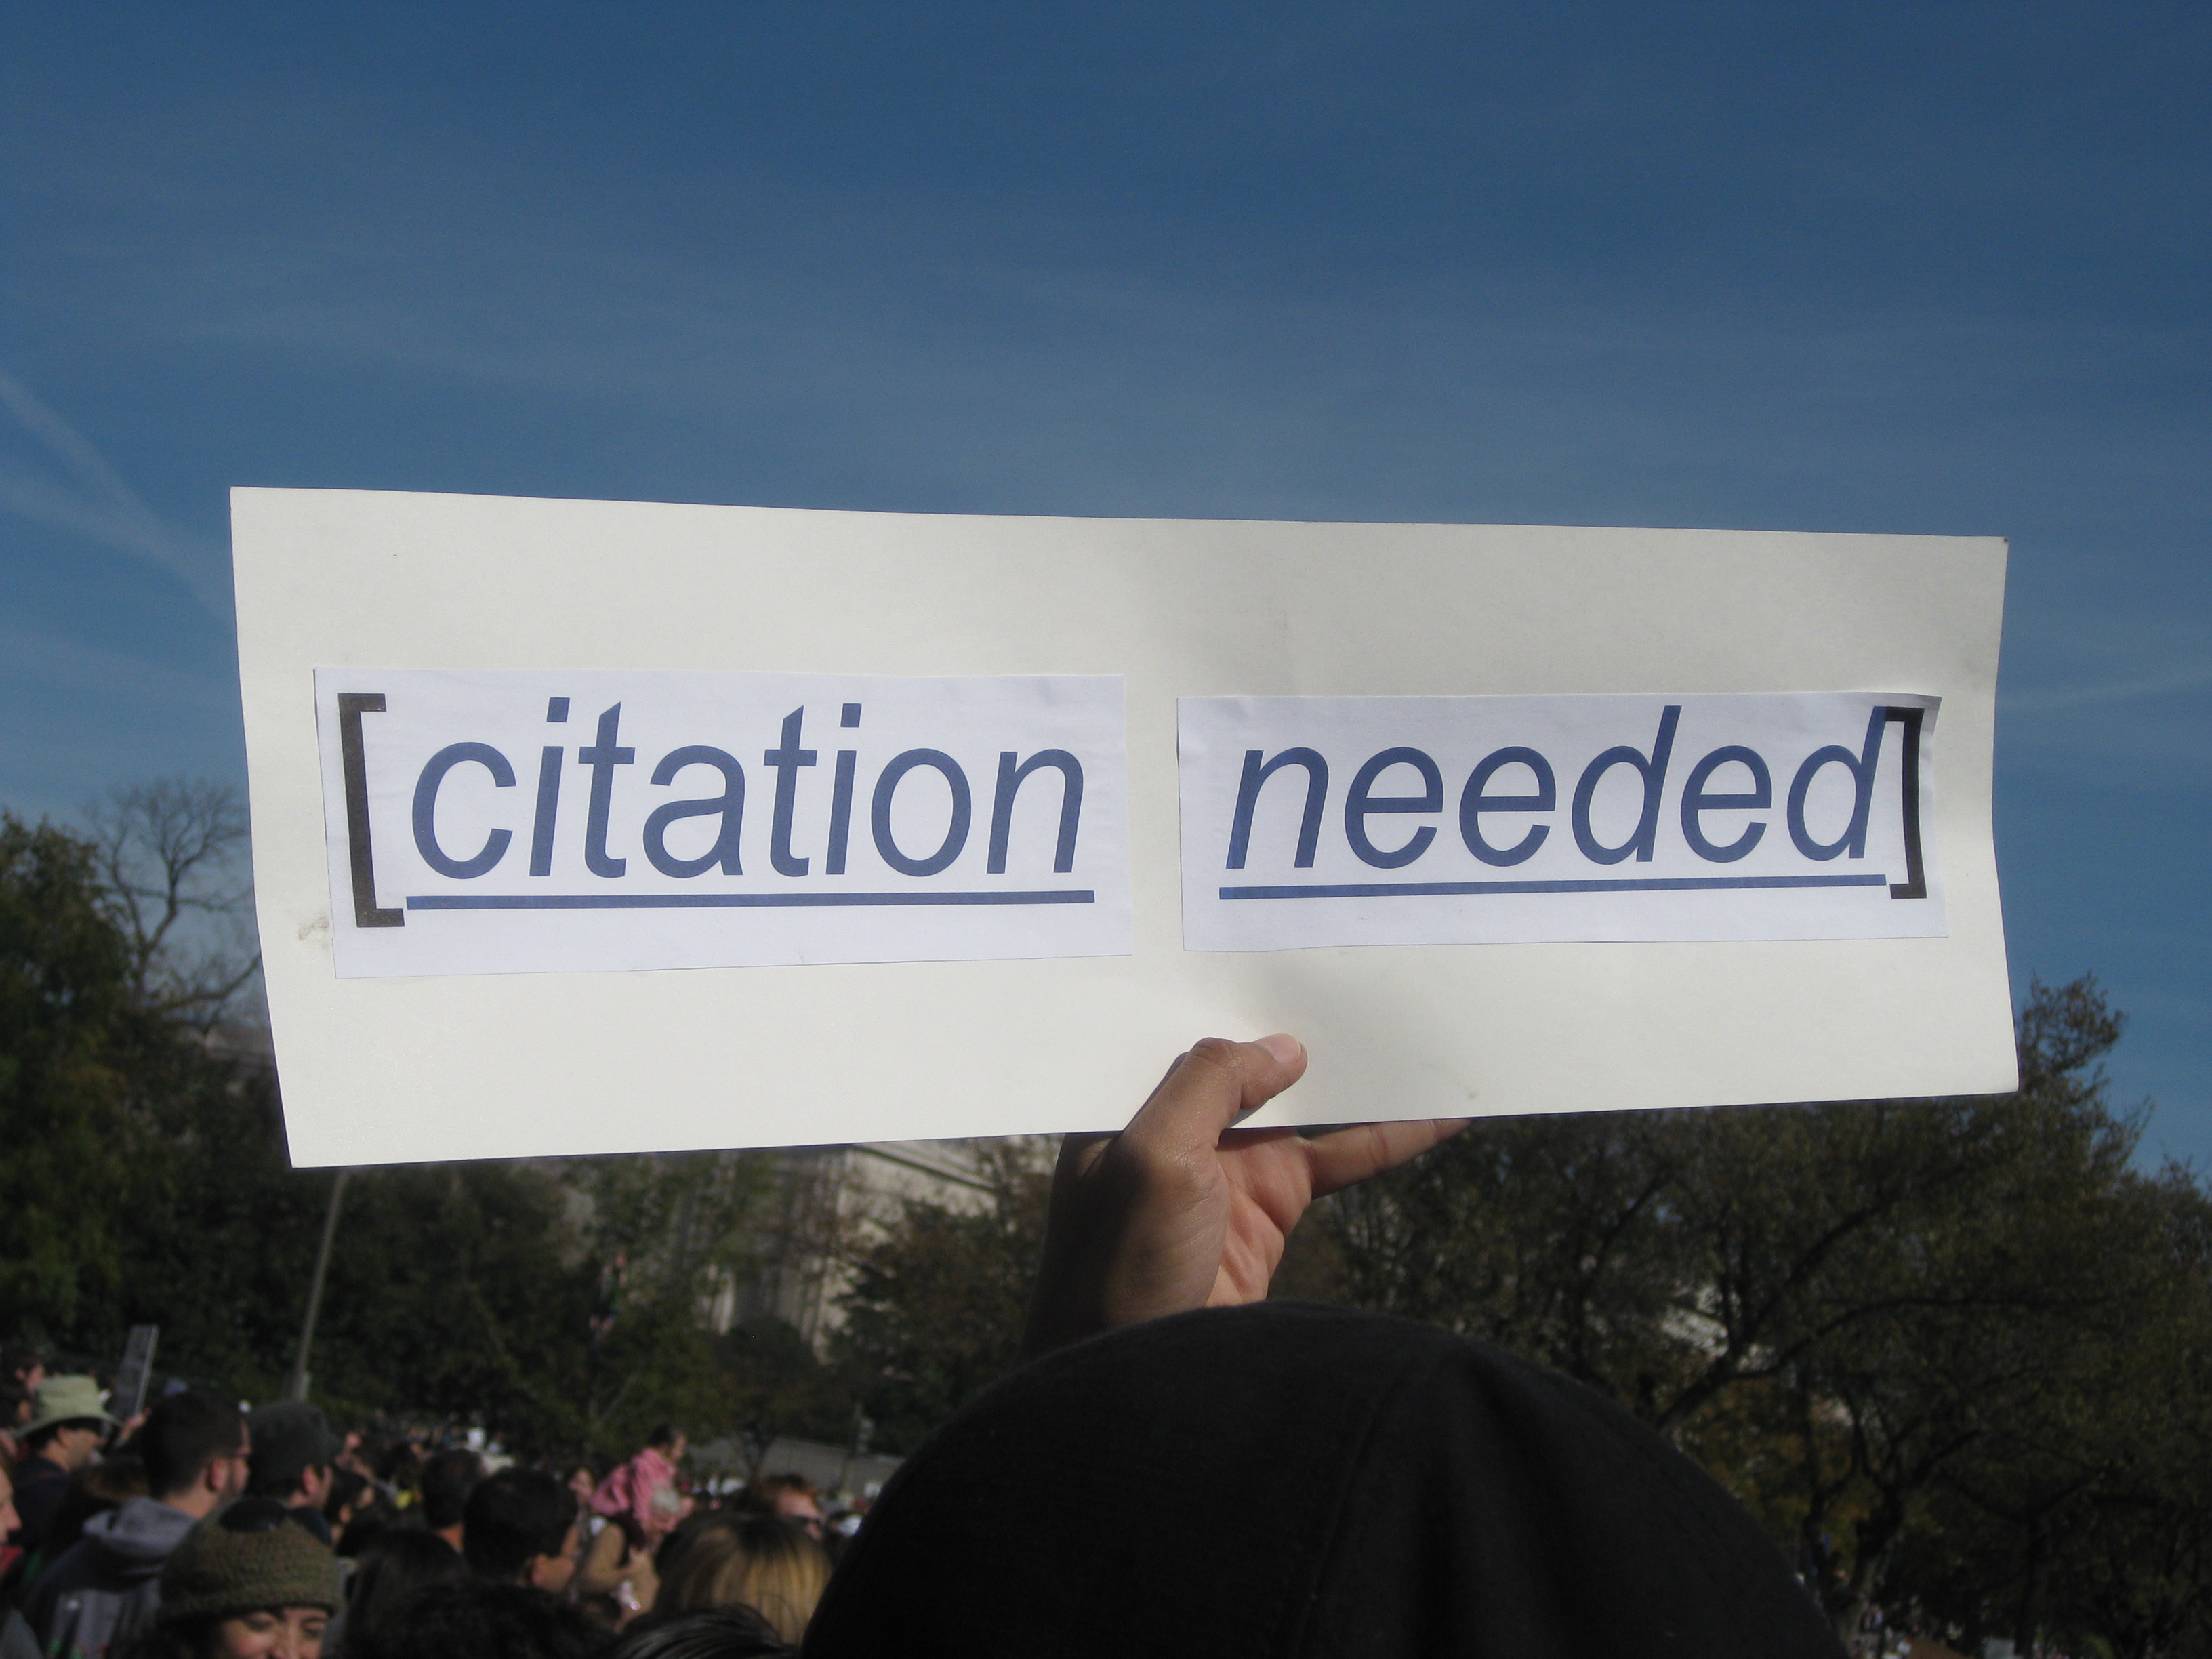 Decorative, "citations needed" sign